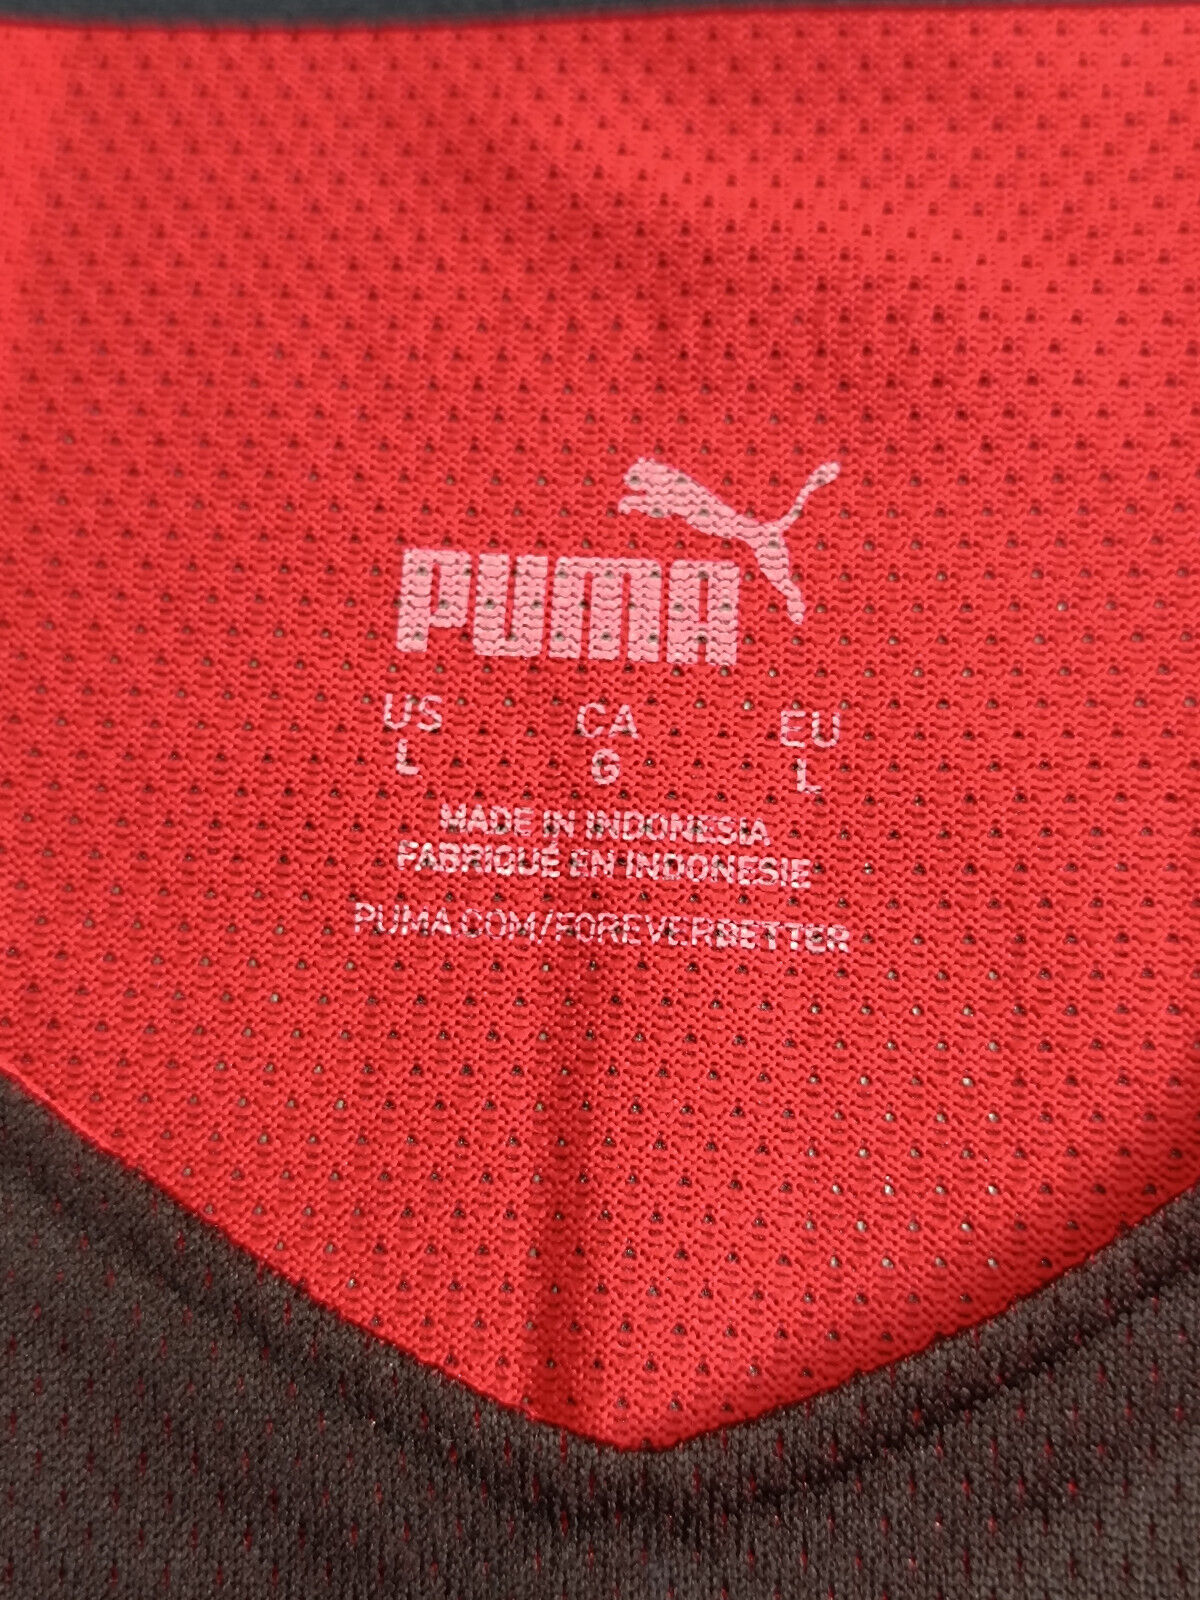 maglia calcio match issue worn AC MILAN THEO 2021-22 Puma Authentic GARA